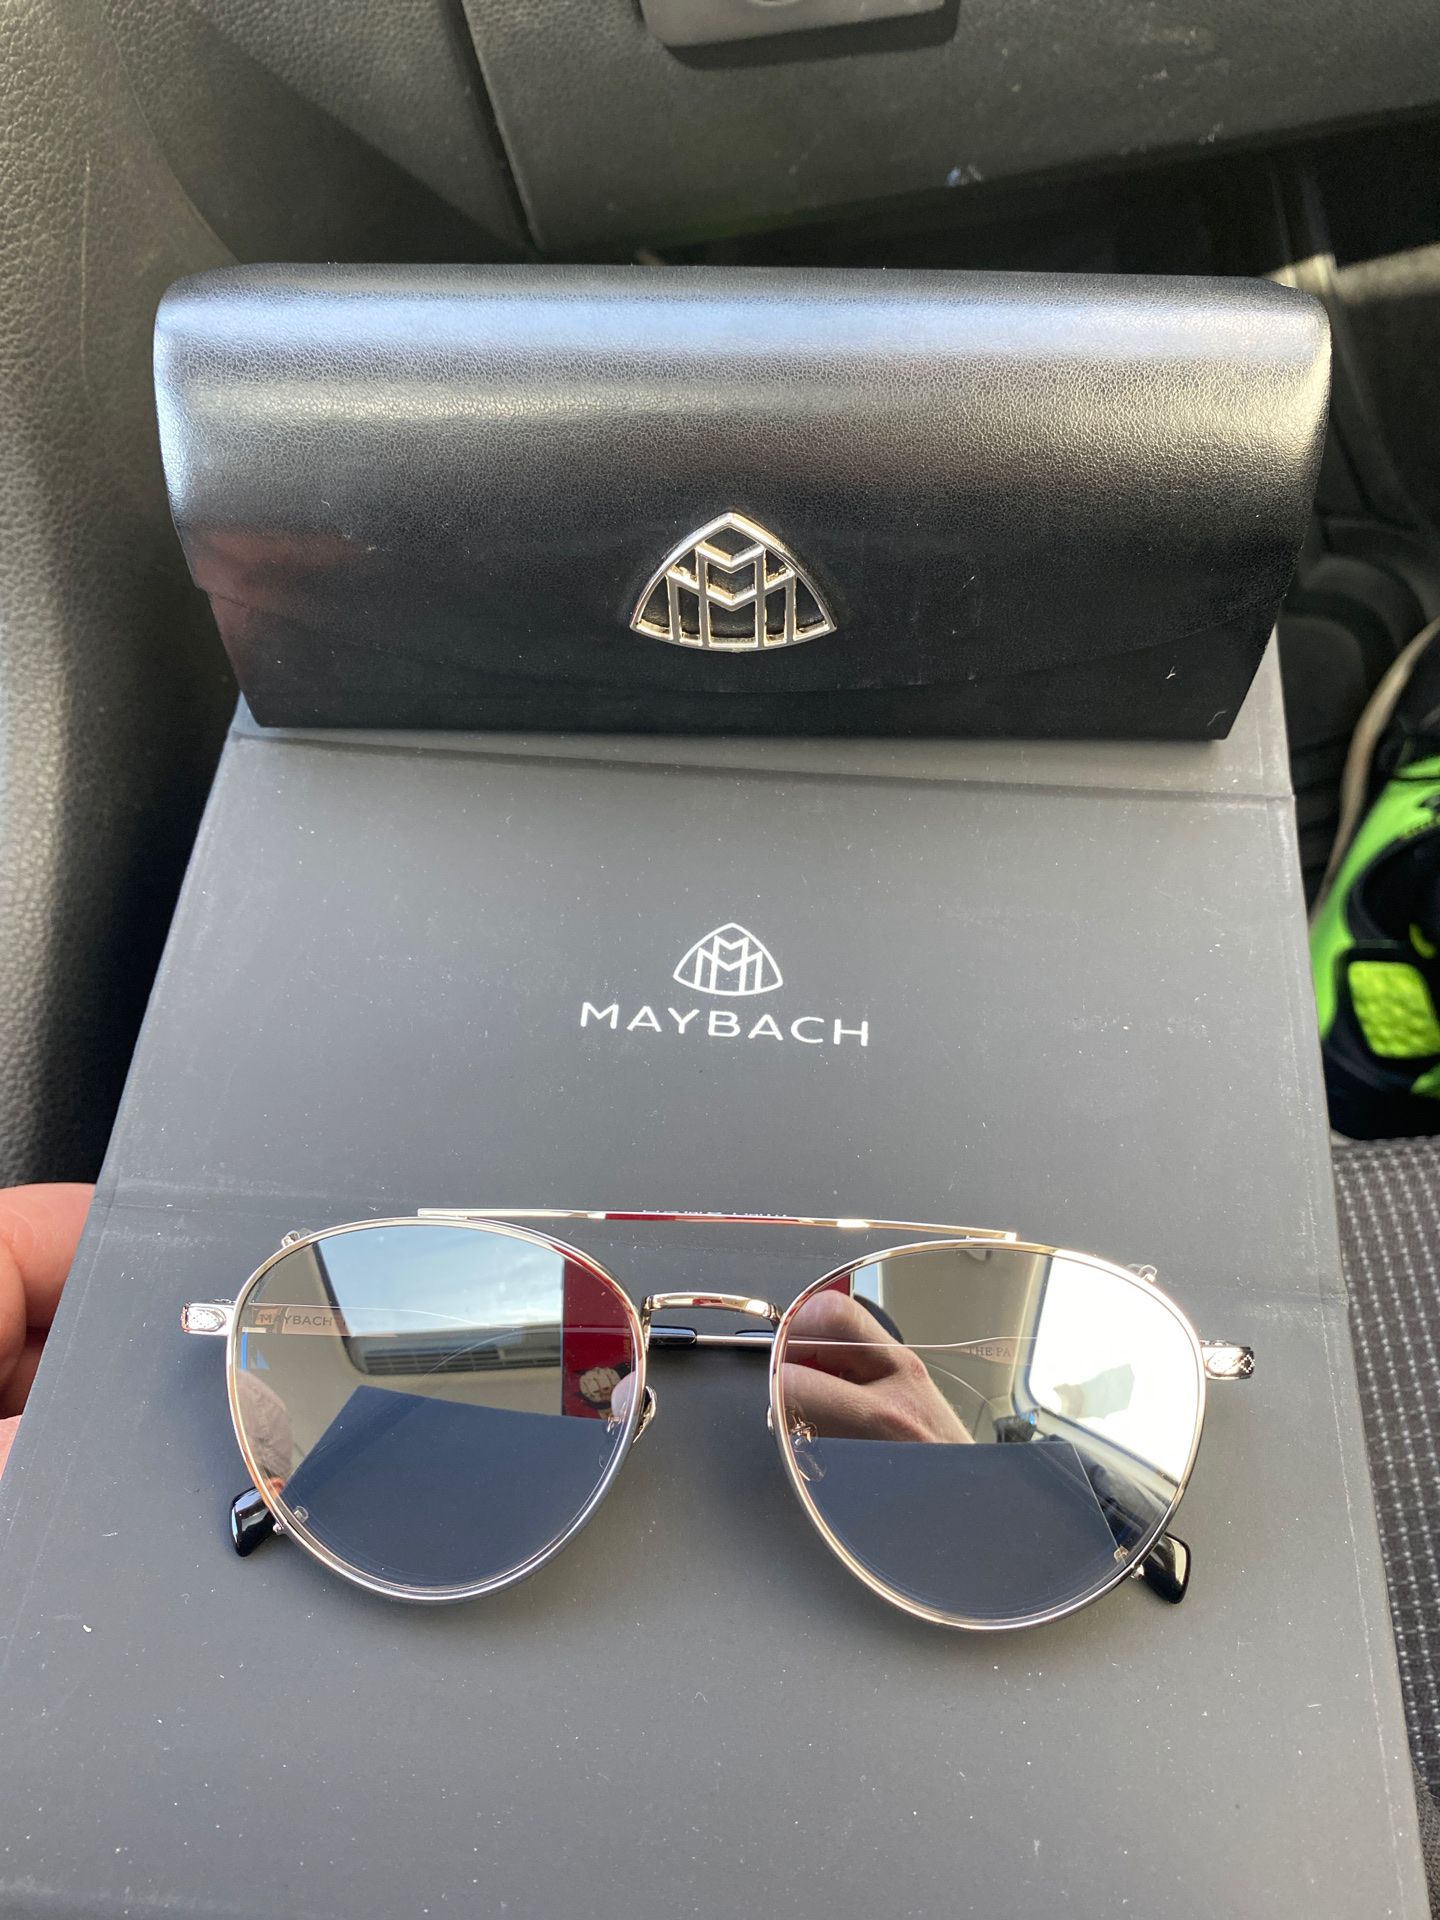 Maybach Sunglasses Brand New $130 OBO